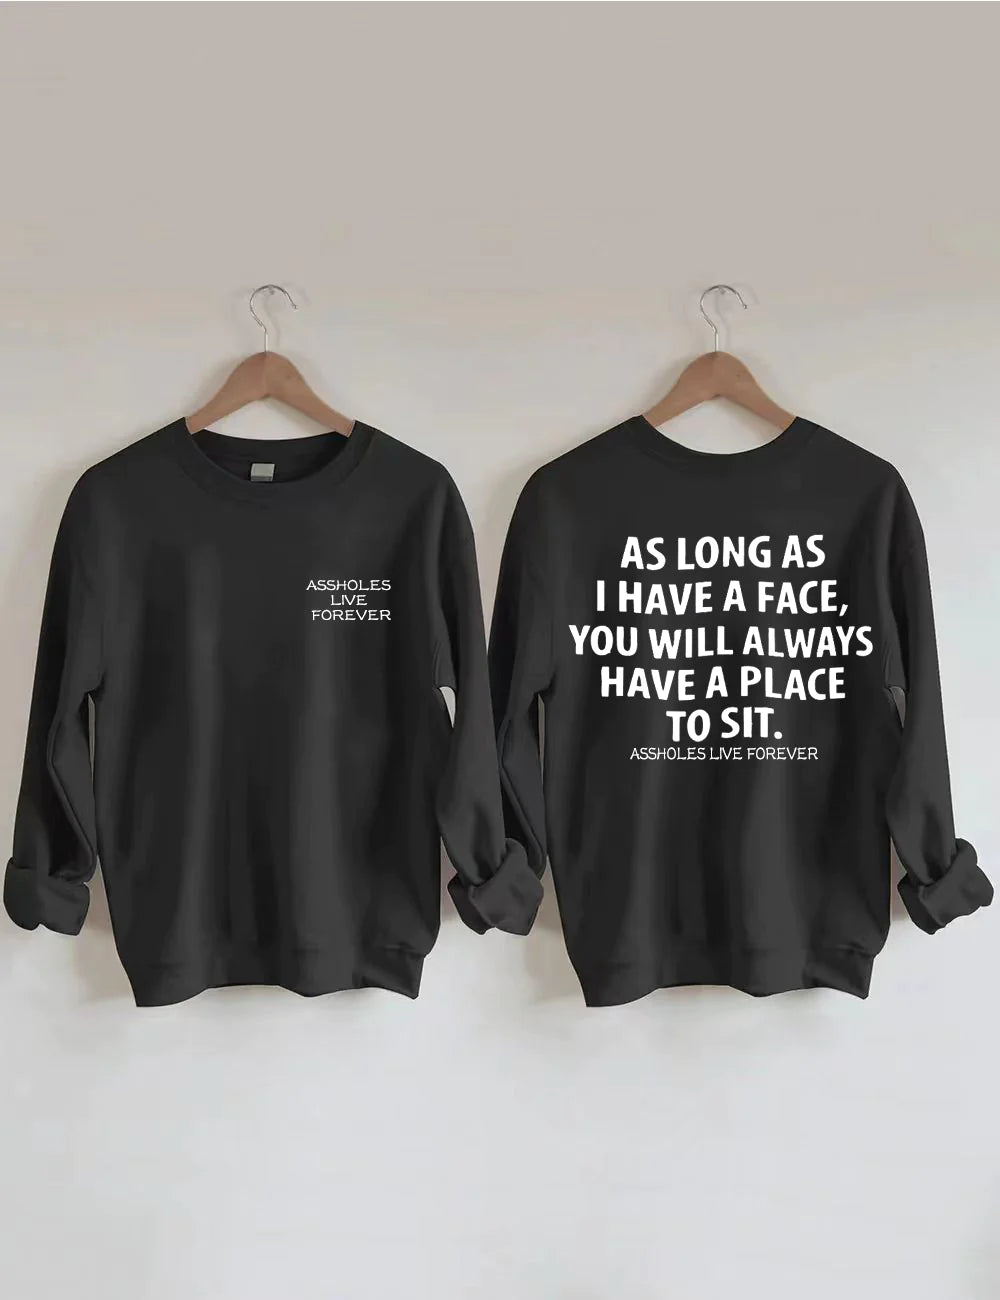 Assholes Live Forever Characteristic Sweatshirt